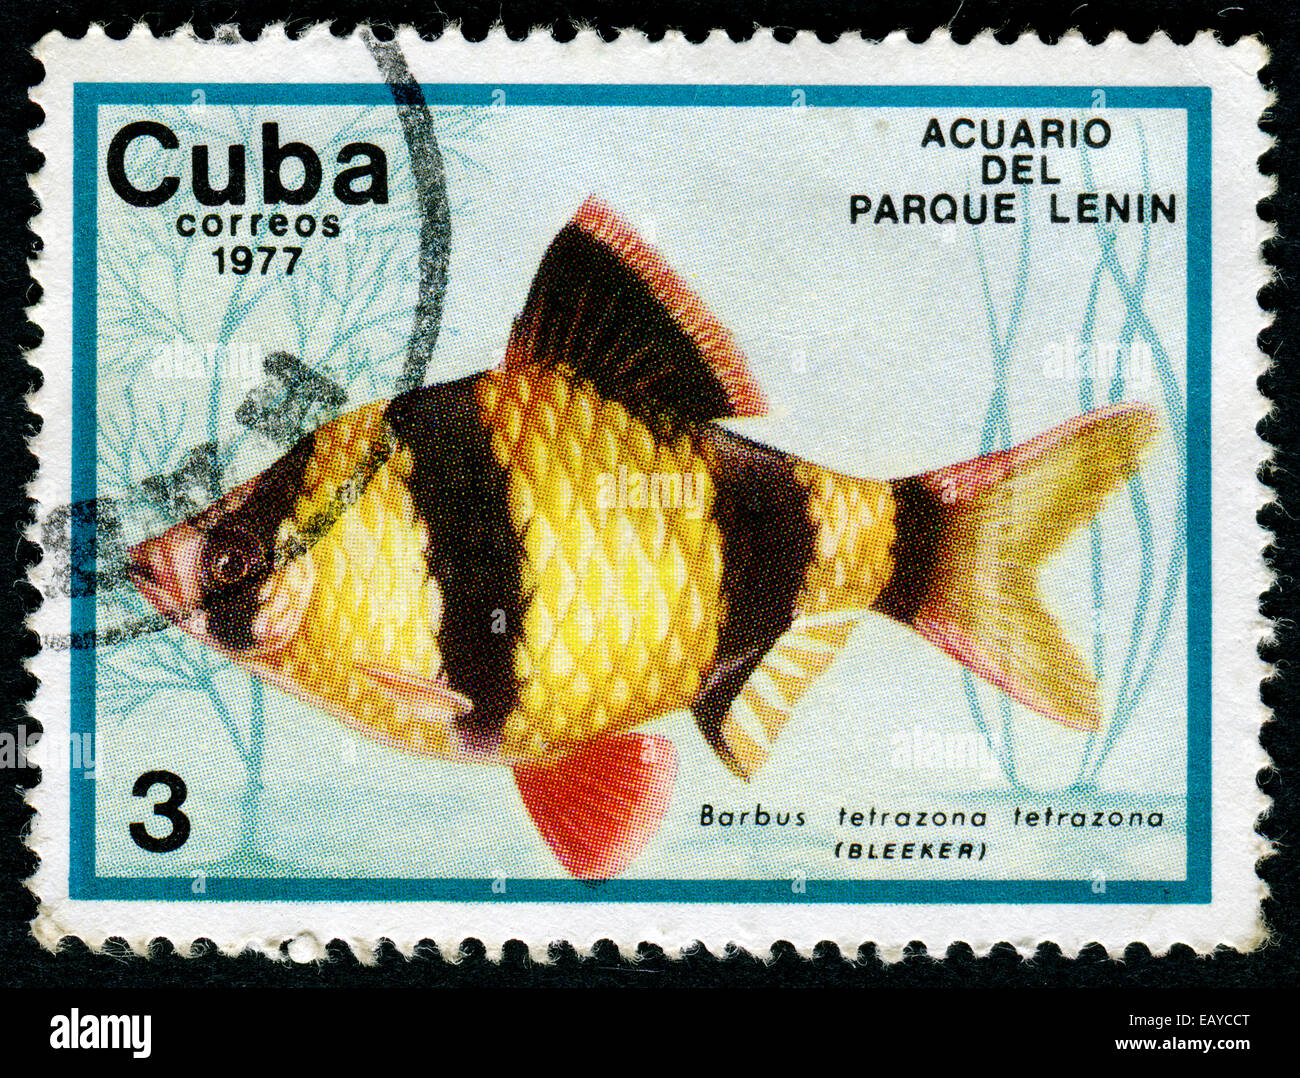 CUBA - CIRCA 1977: a stamp printed by Cuba show the fishes with the inscription Barbus tetrazona tetrazona, Lenin Park Aquarium, Stock Photo